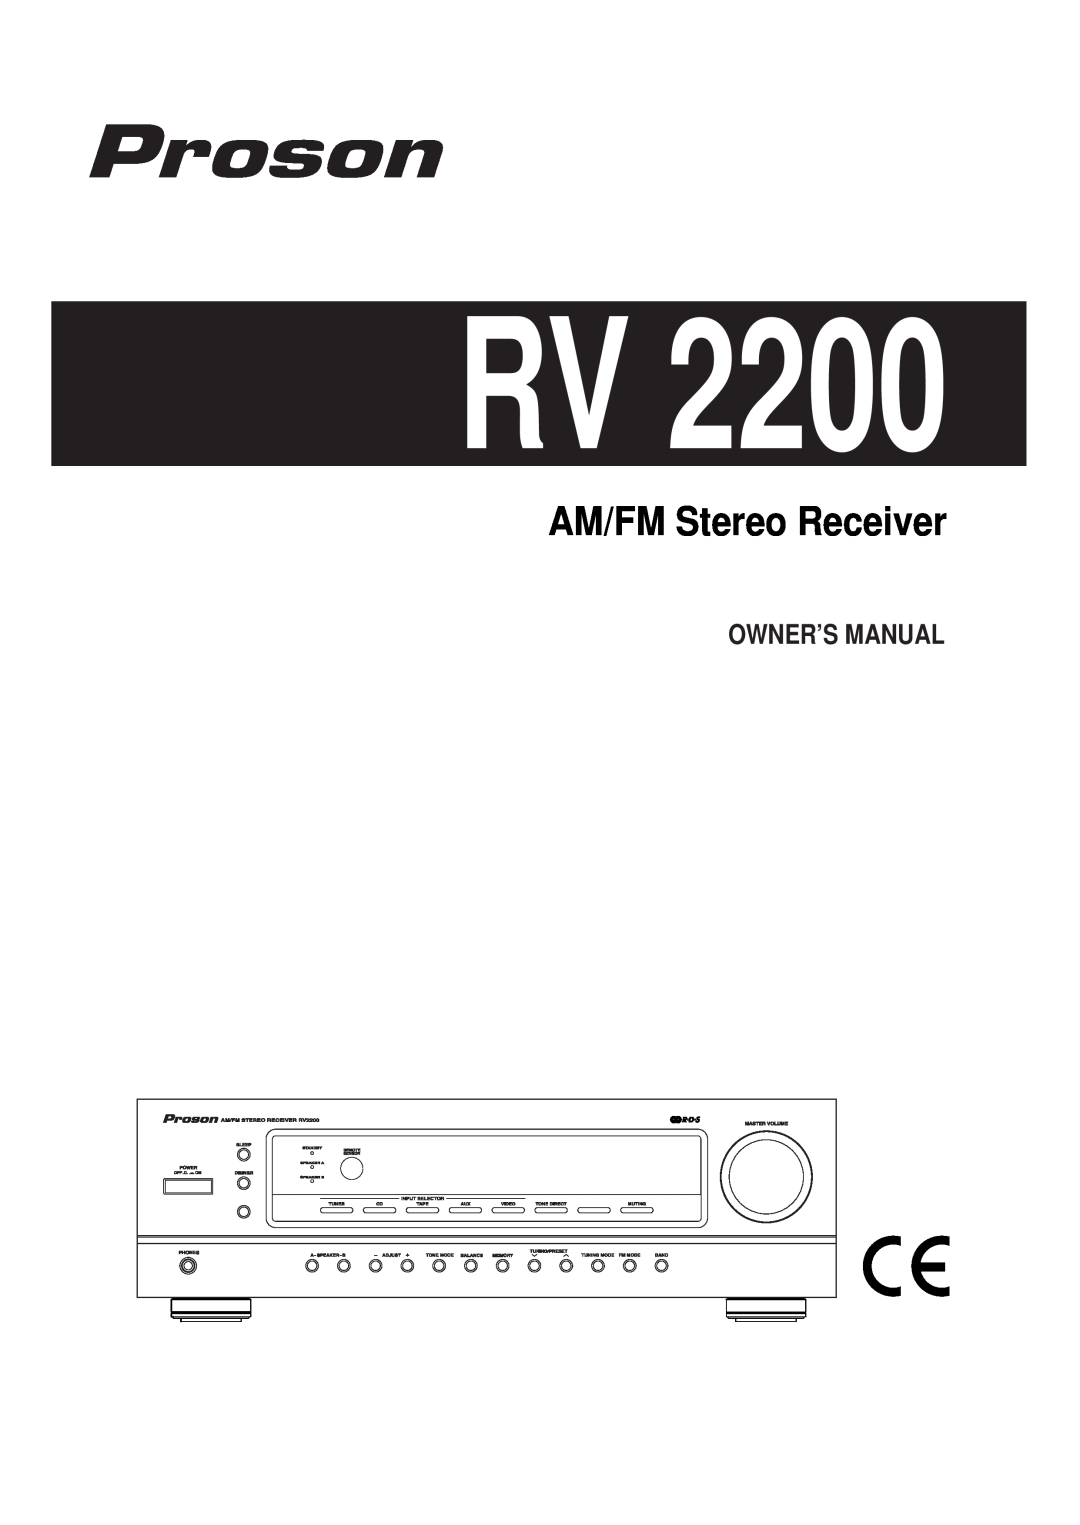 Proson RV 2200 manual AM/FM Stereo Receiver 